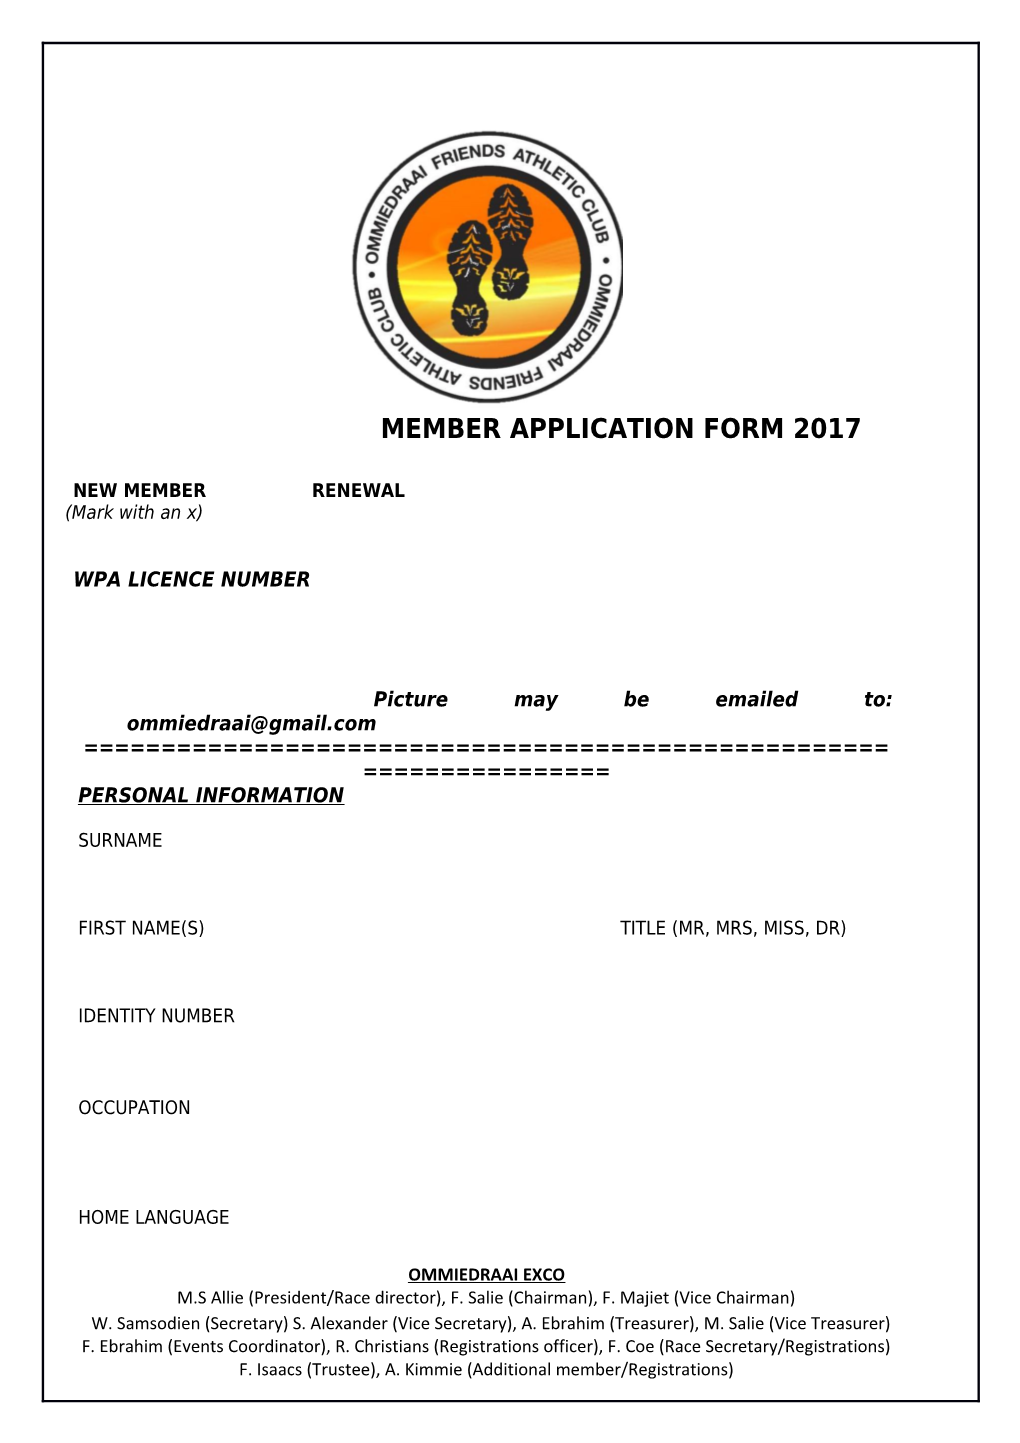 Member Application Form 2017